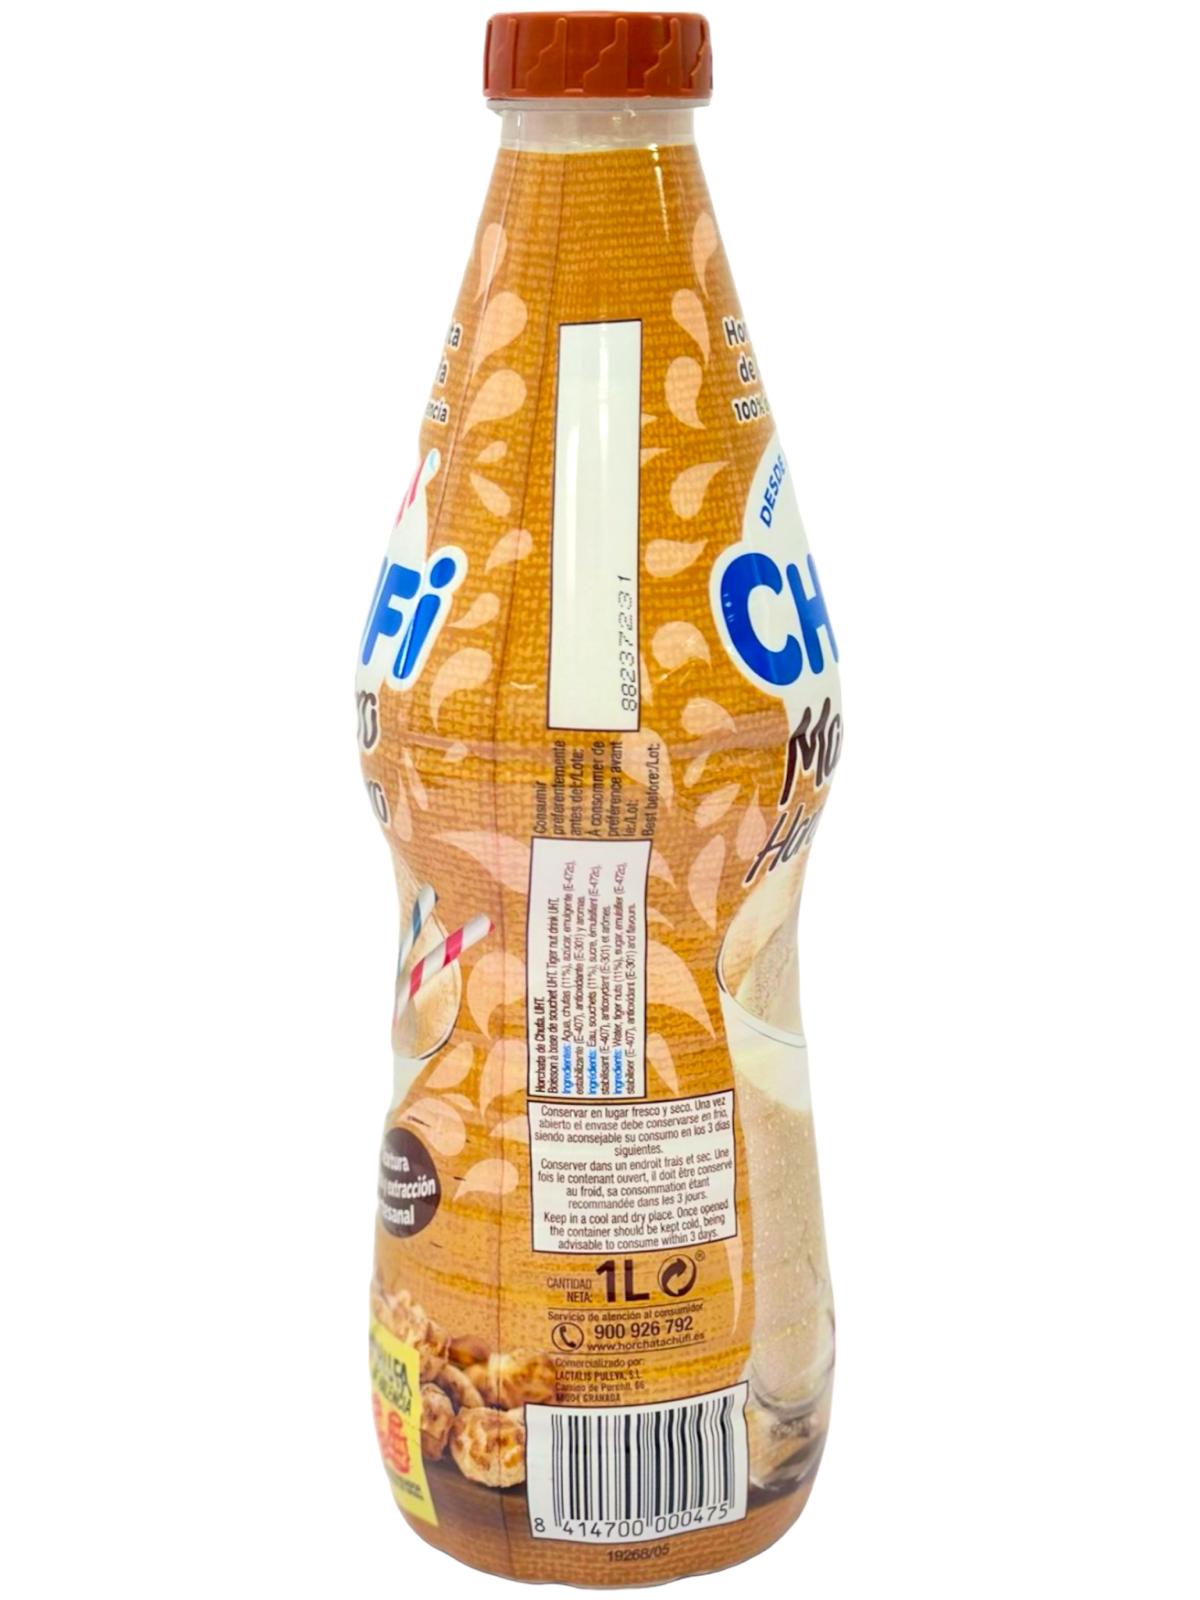 Chufi Maestro Horchata Spanish Tigernut Drink 1 litre Intense Flavour